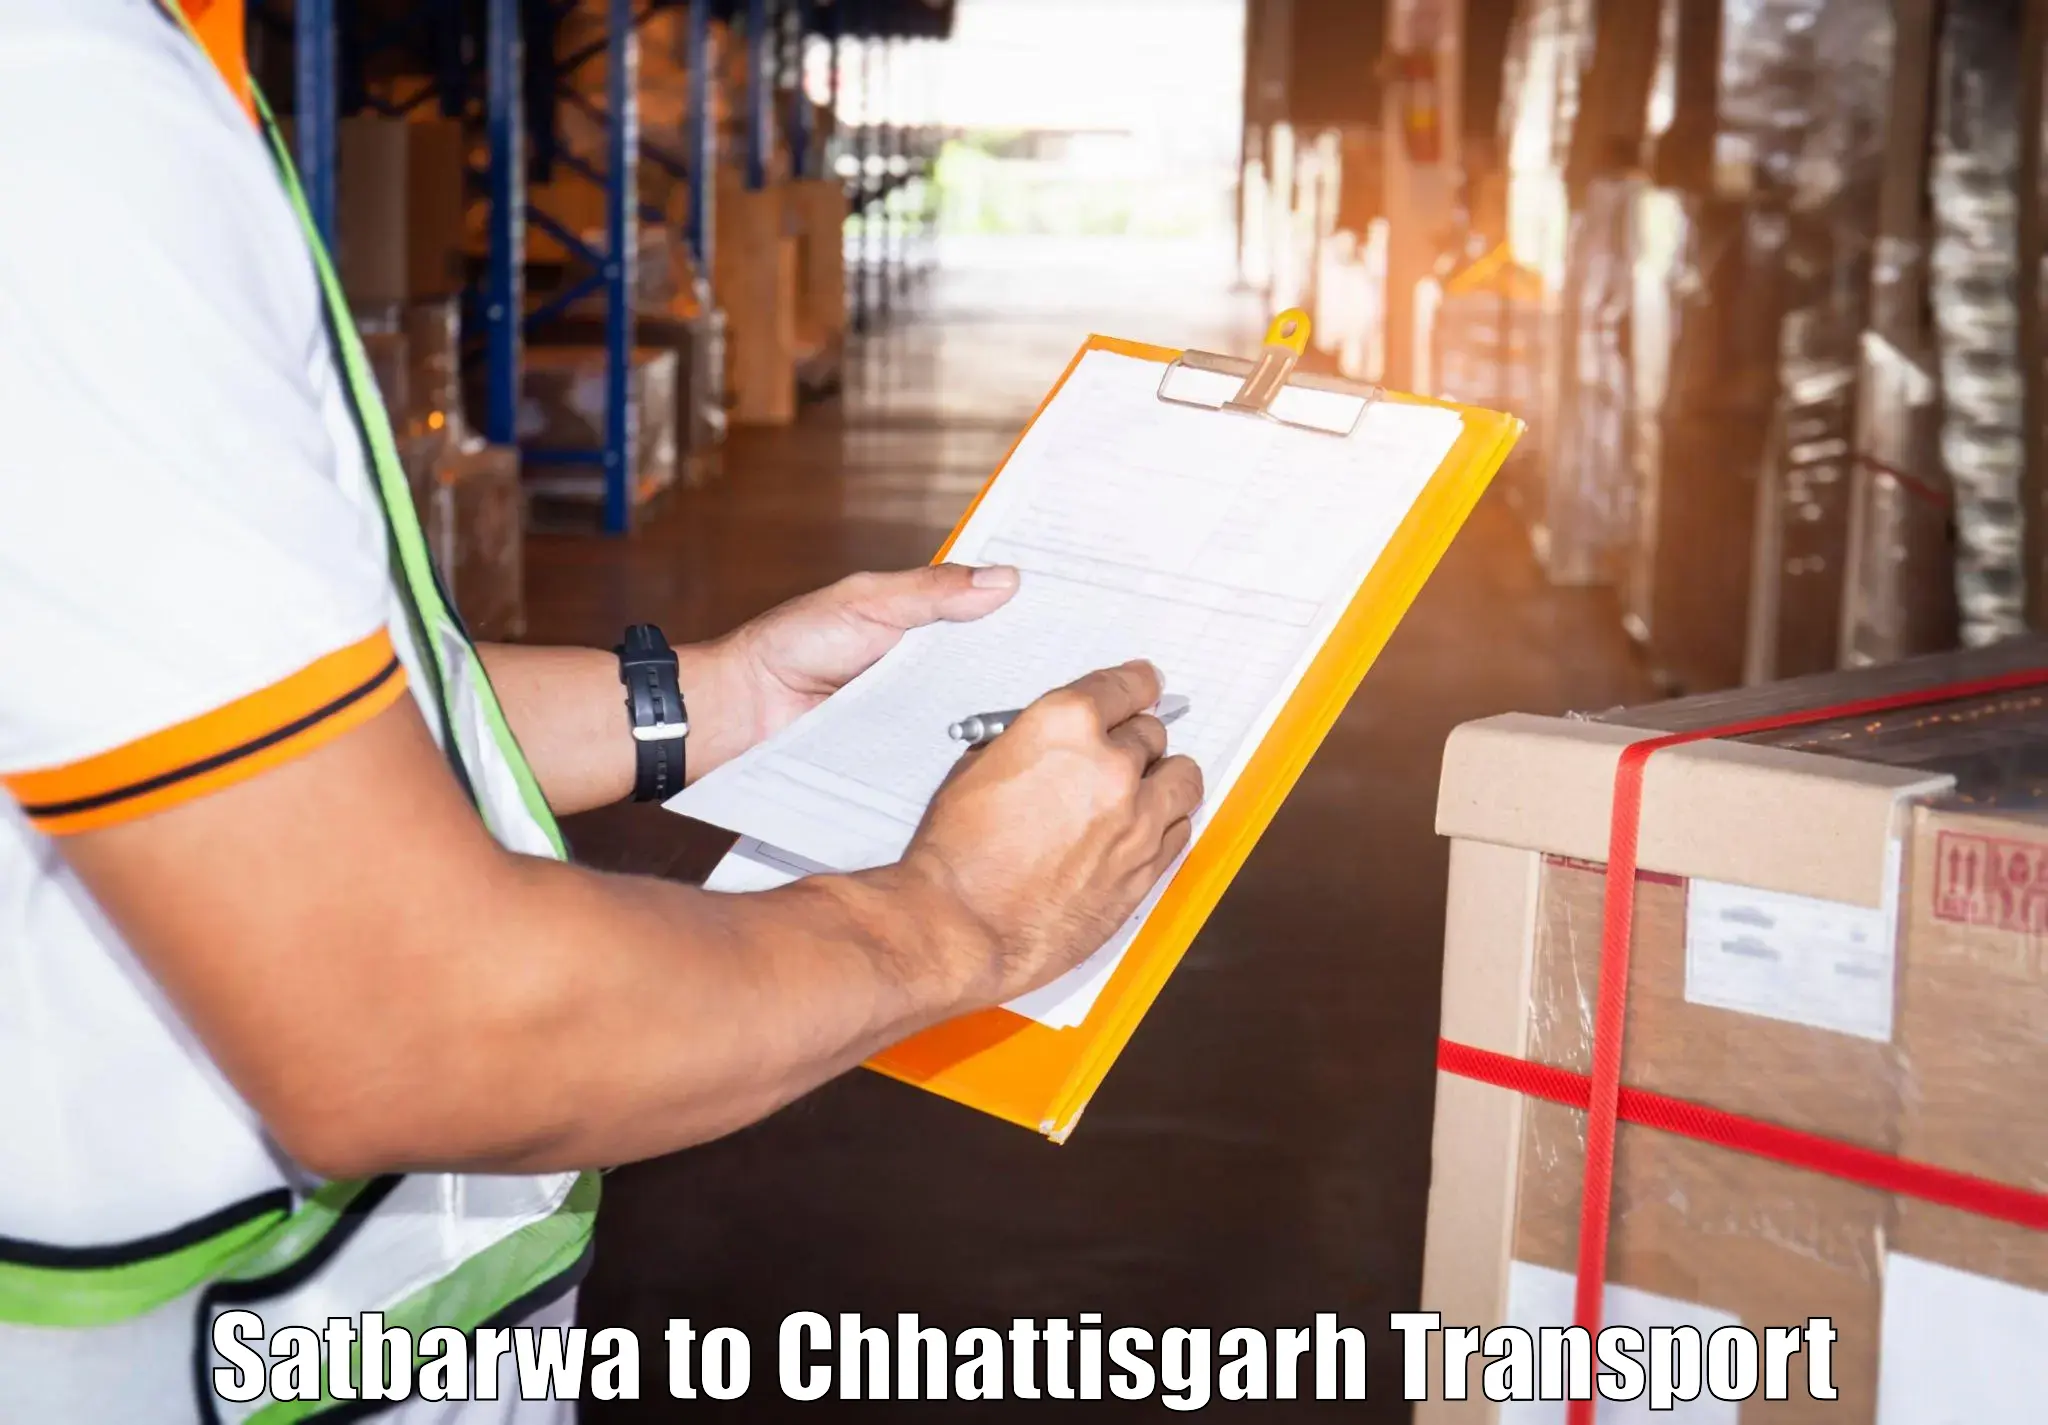 Pick up transport service Satbarwa to Berla